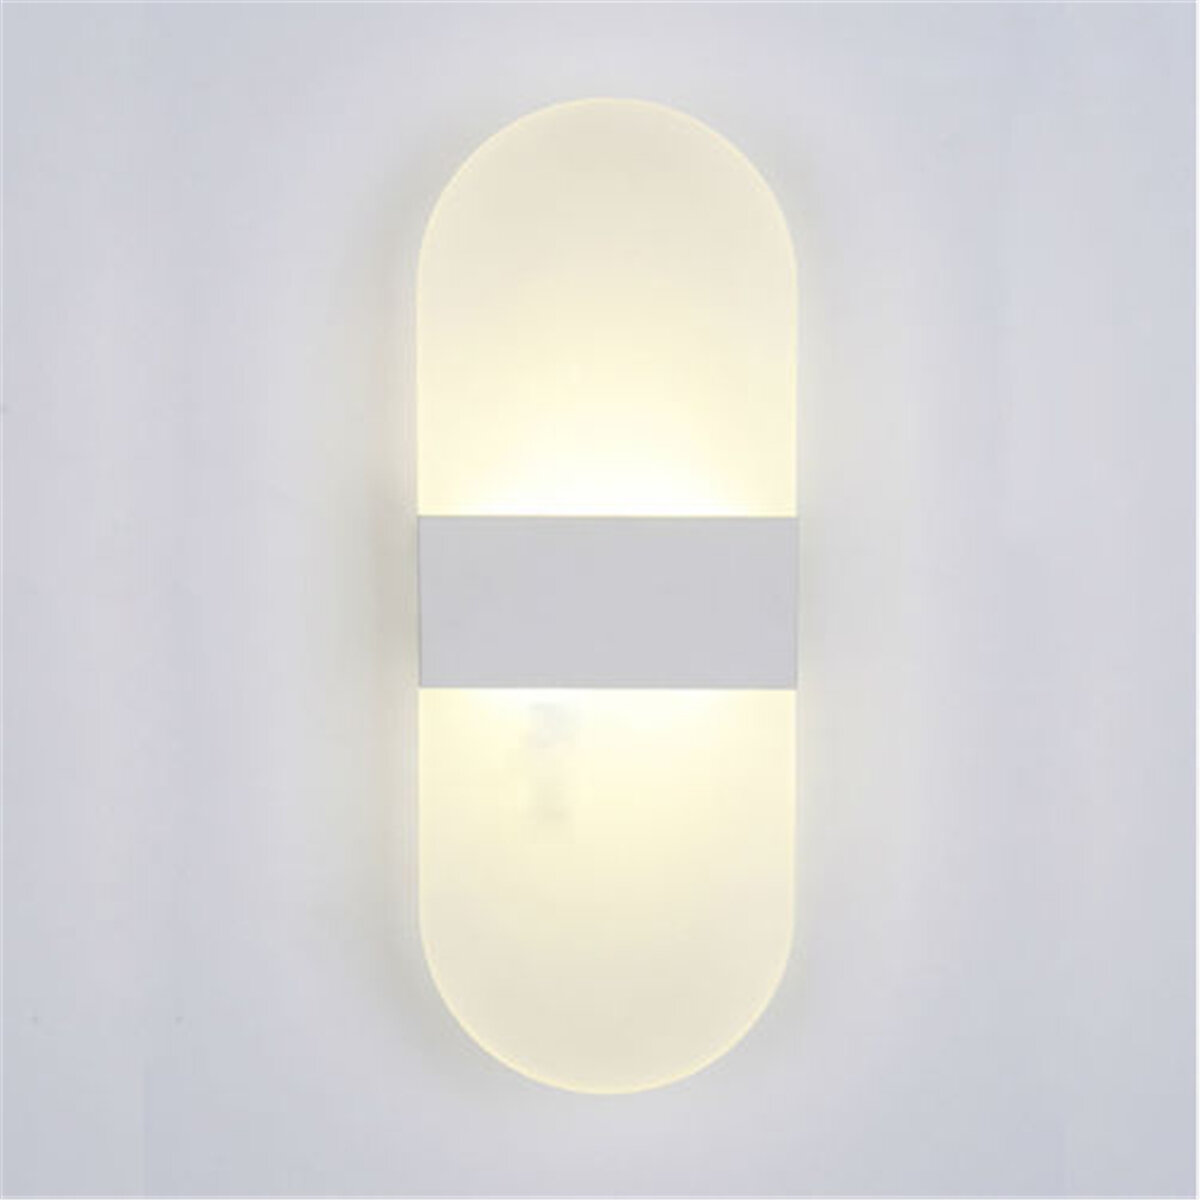 140x60x10MM 3W LED moderne acryl mini wandlamp ovale vorm keuken slaapkamer nachtkastje pad lamp